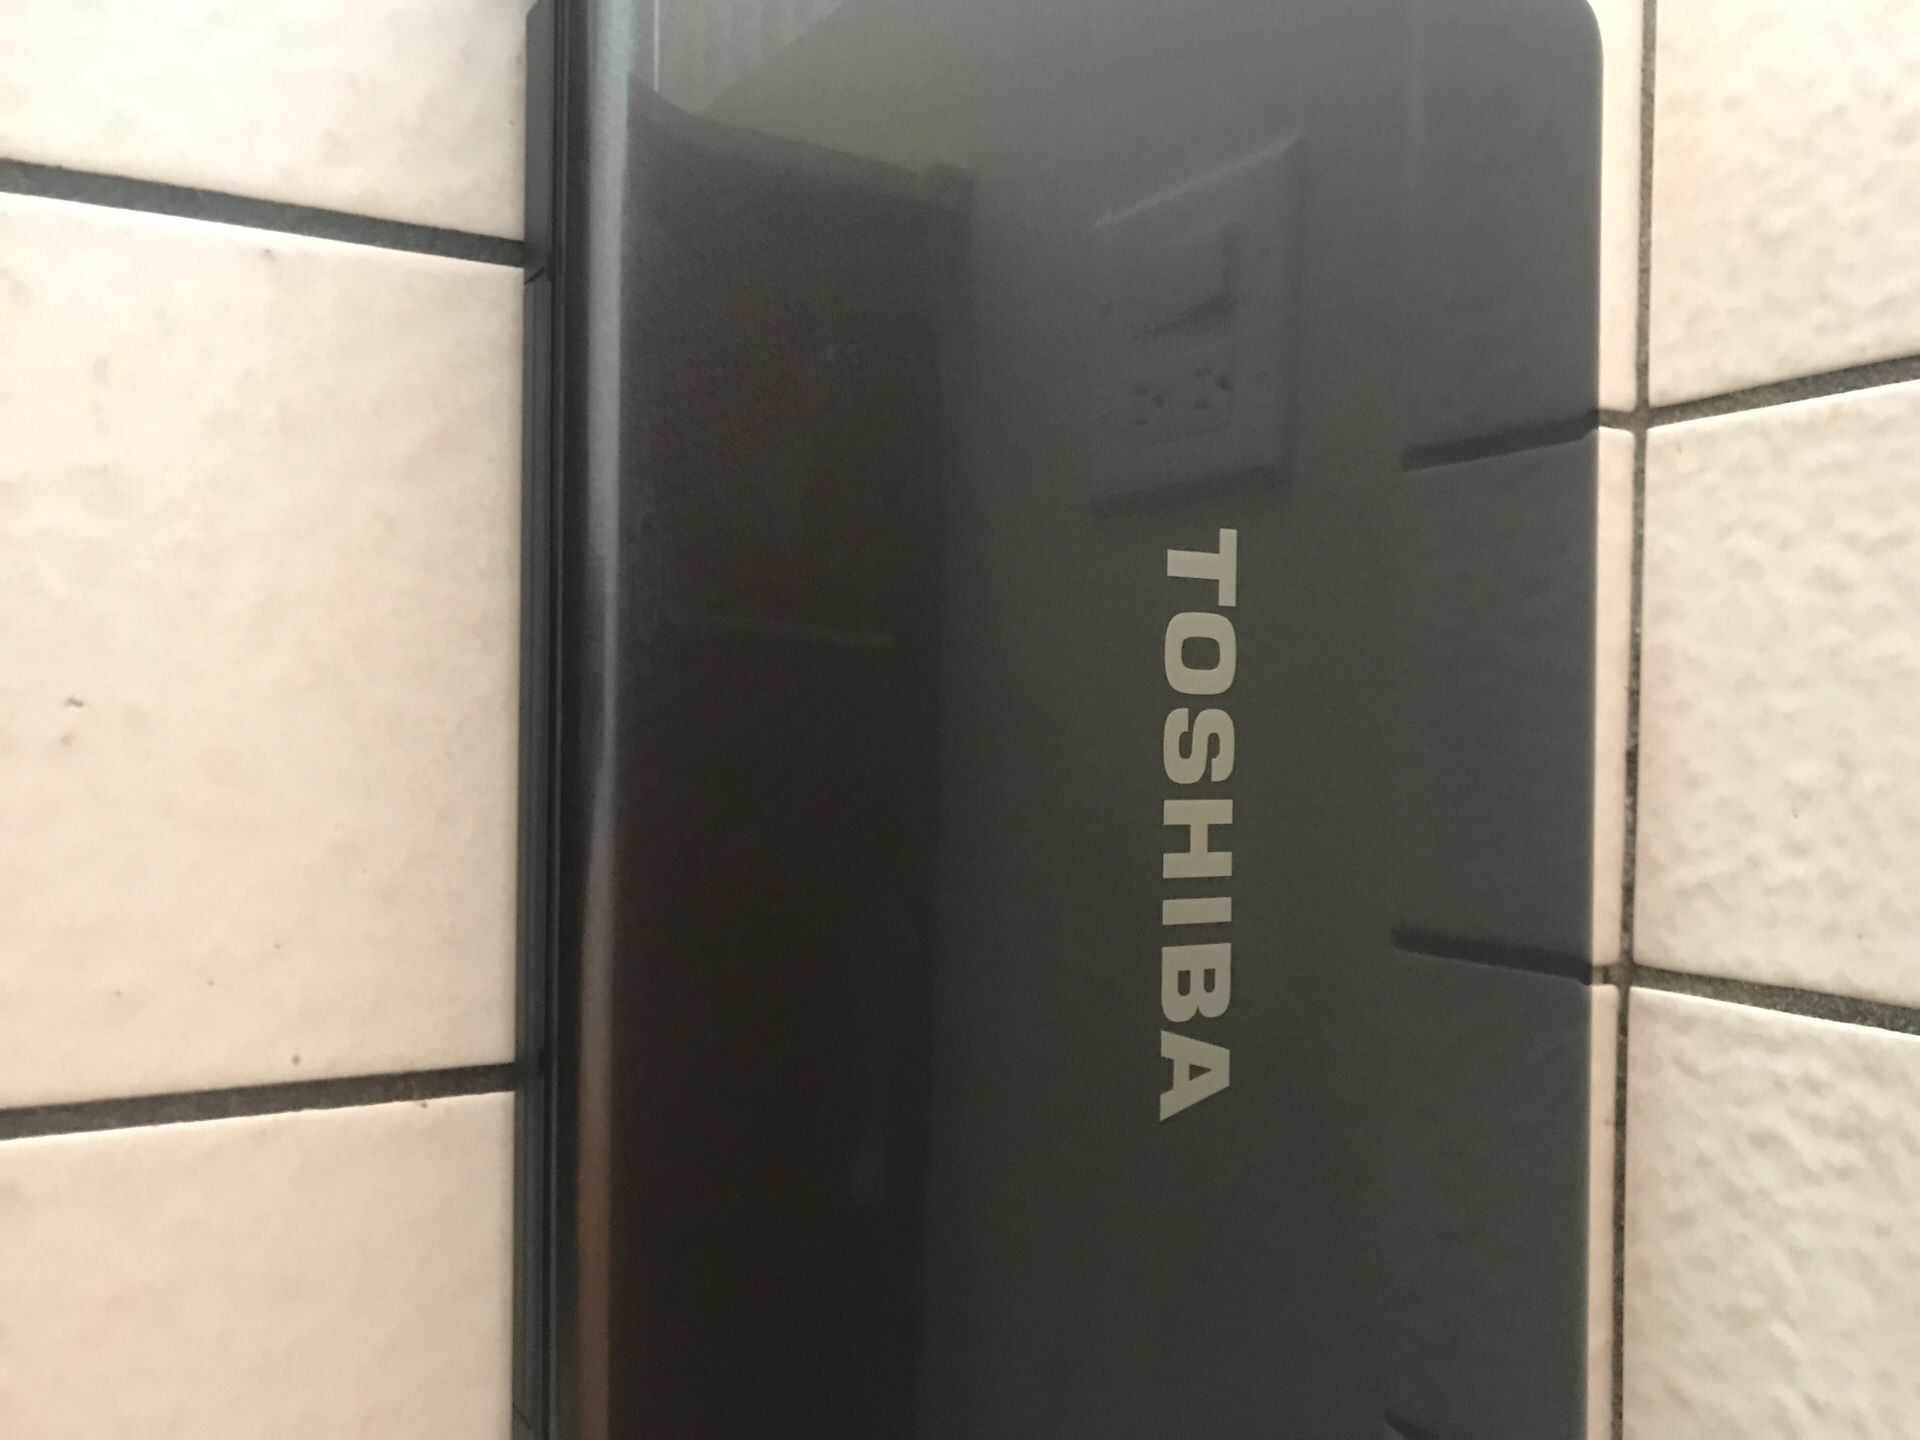 Toshiba Laptop (Not Working)